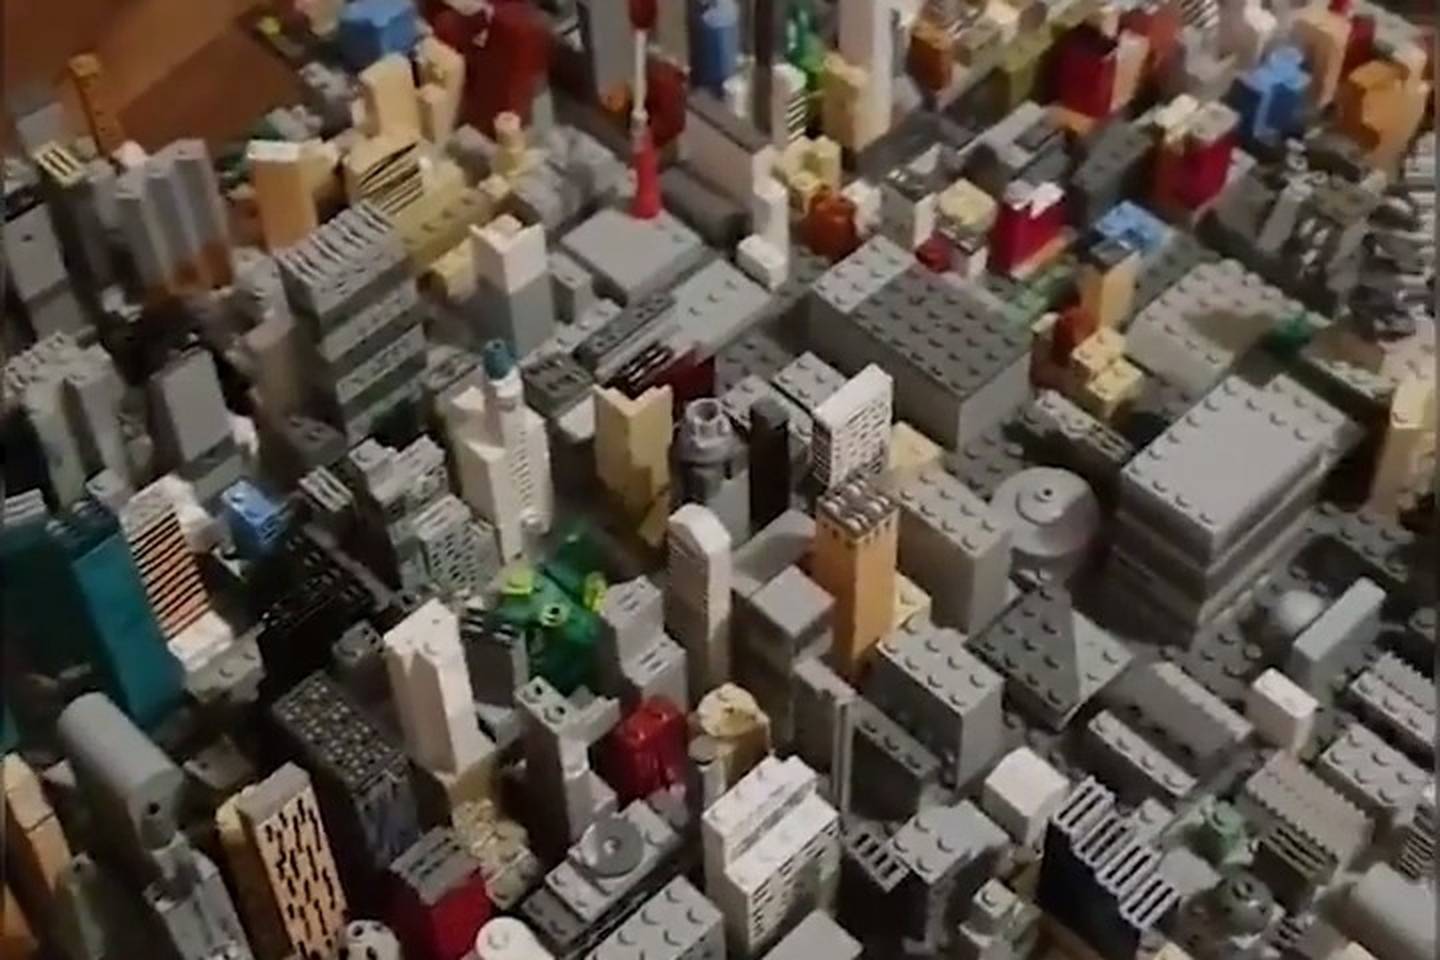 LEGO New York City